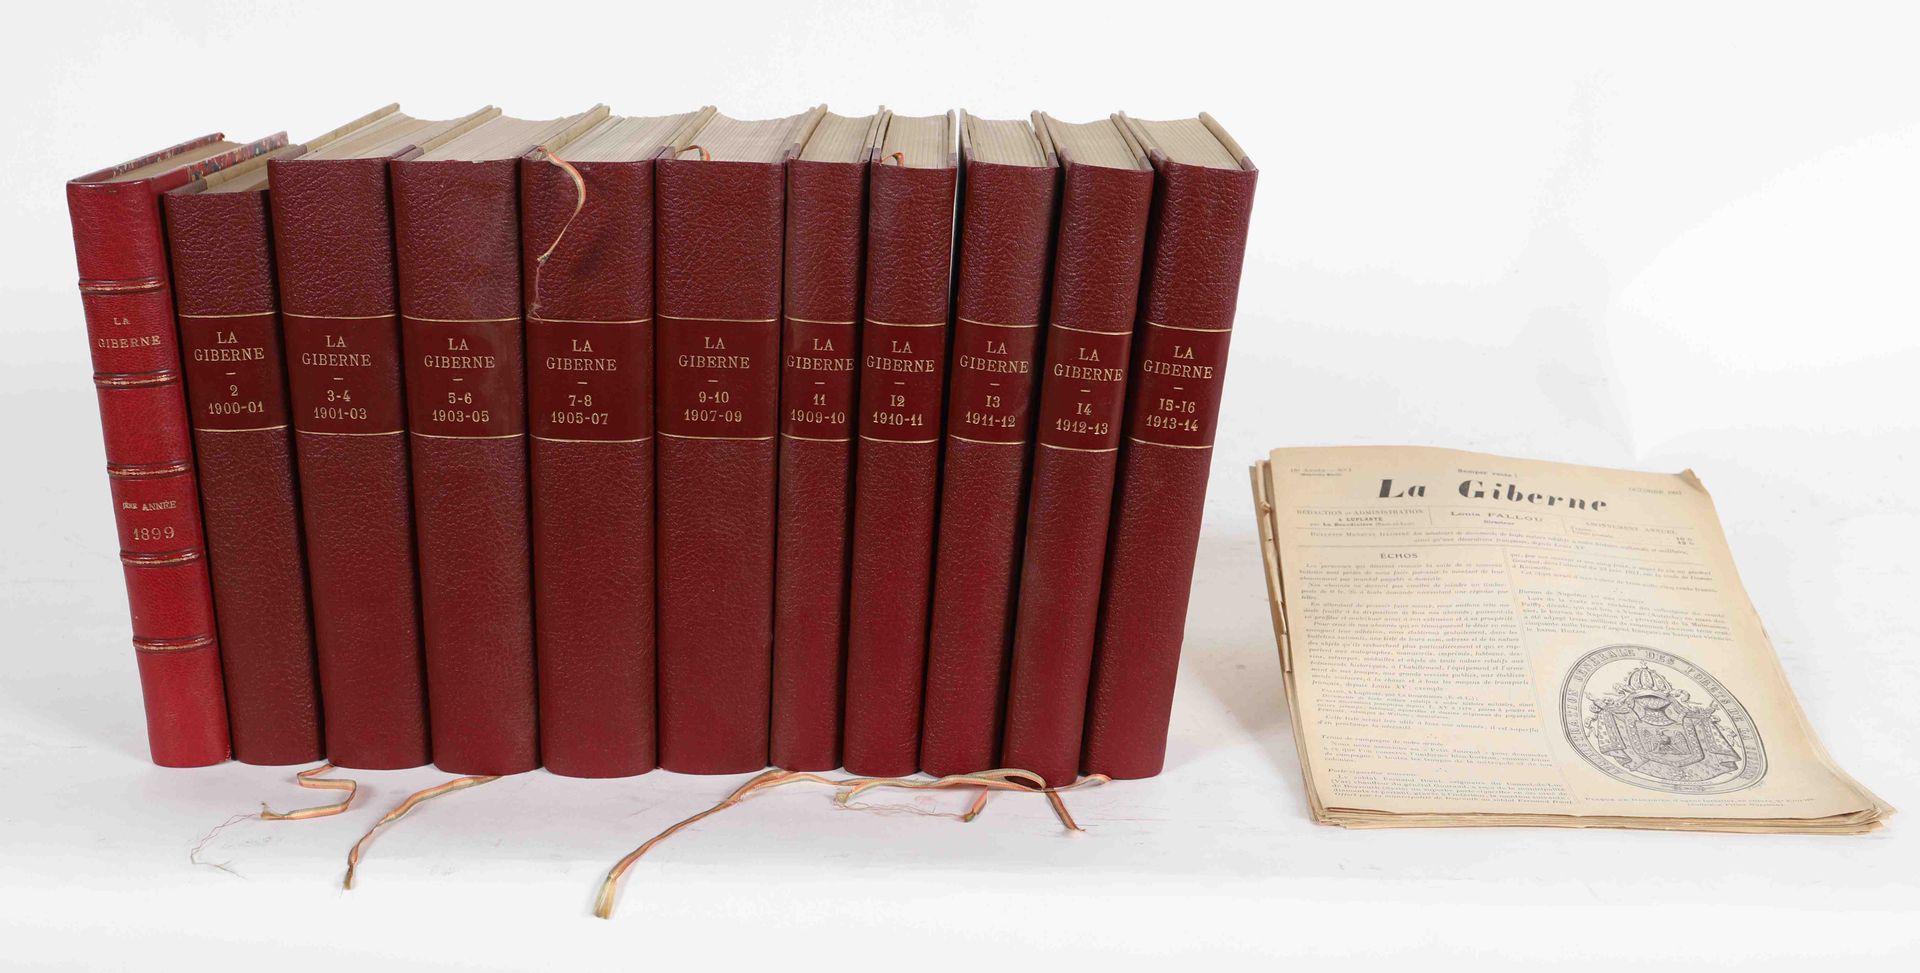 Null "La Giberne" Louis FALLOU

原本完整的合订本，包括1899至1914年的11卷，以及1921至1925年的散页。